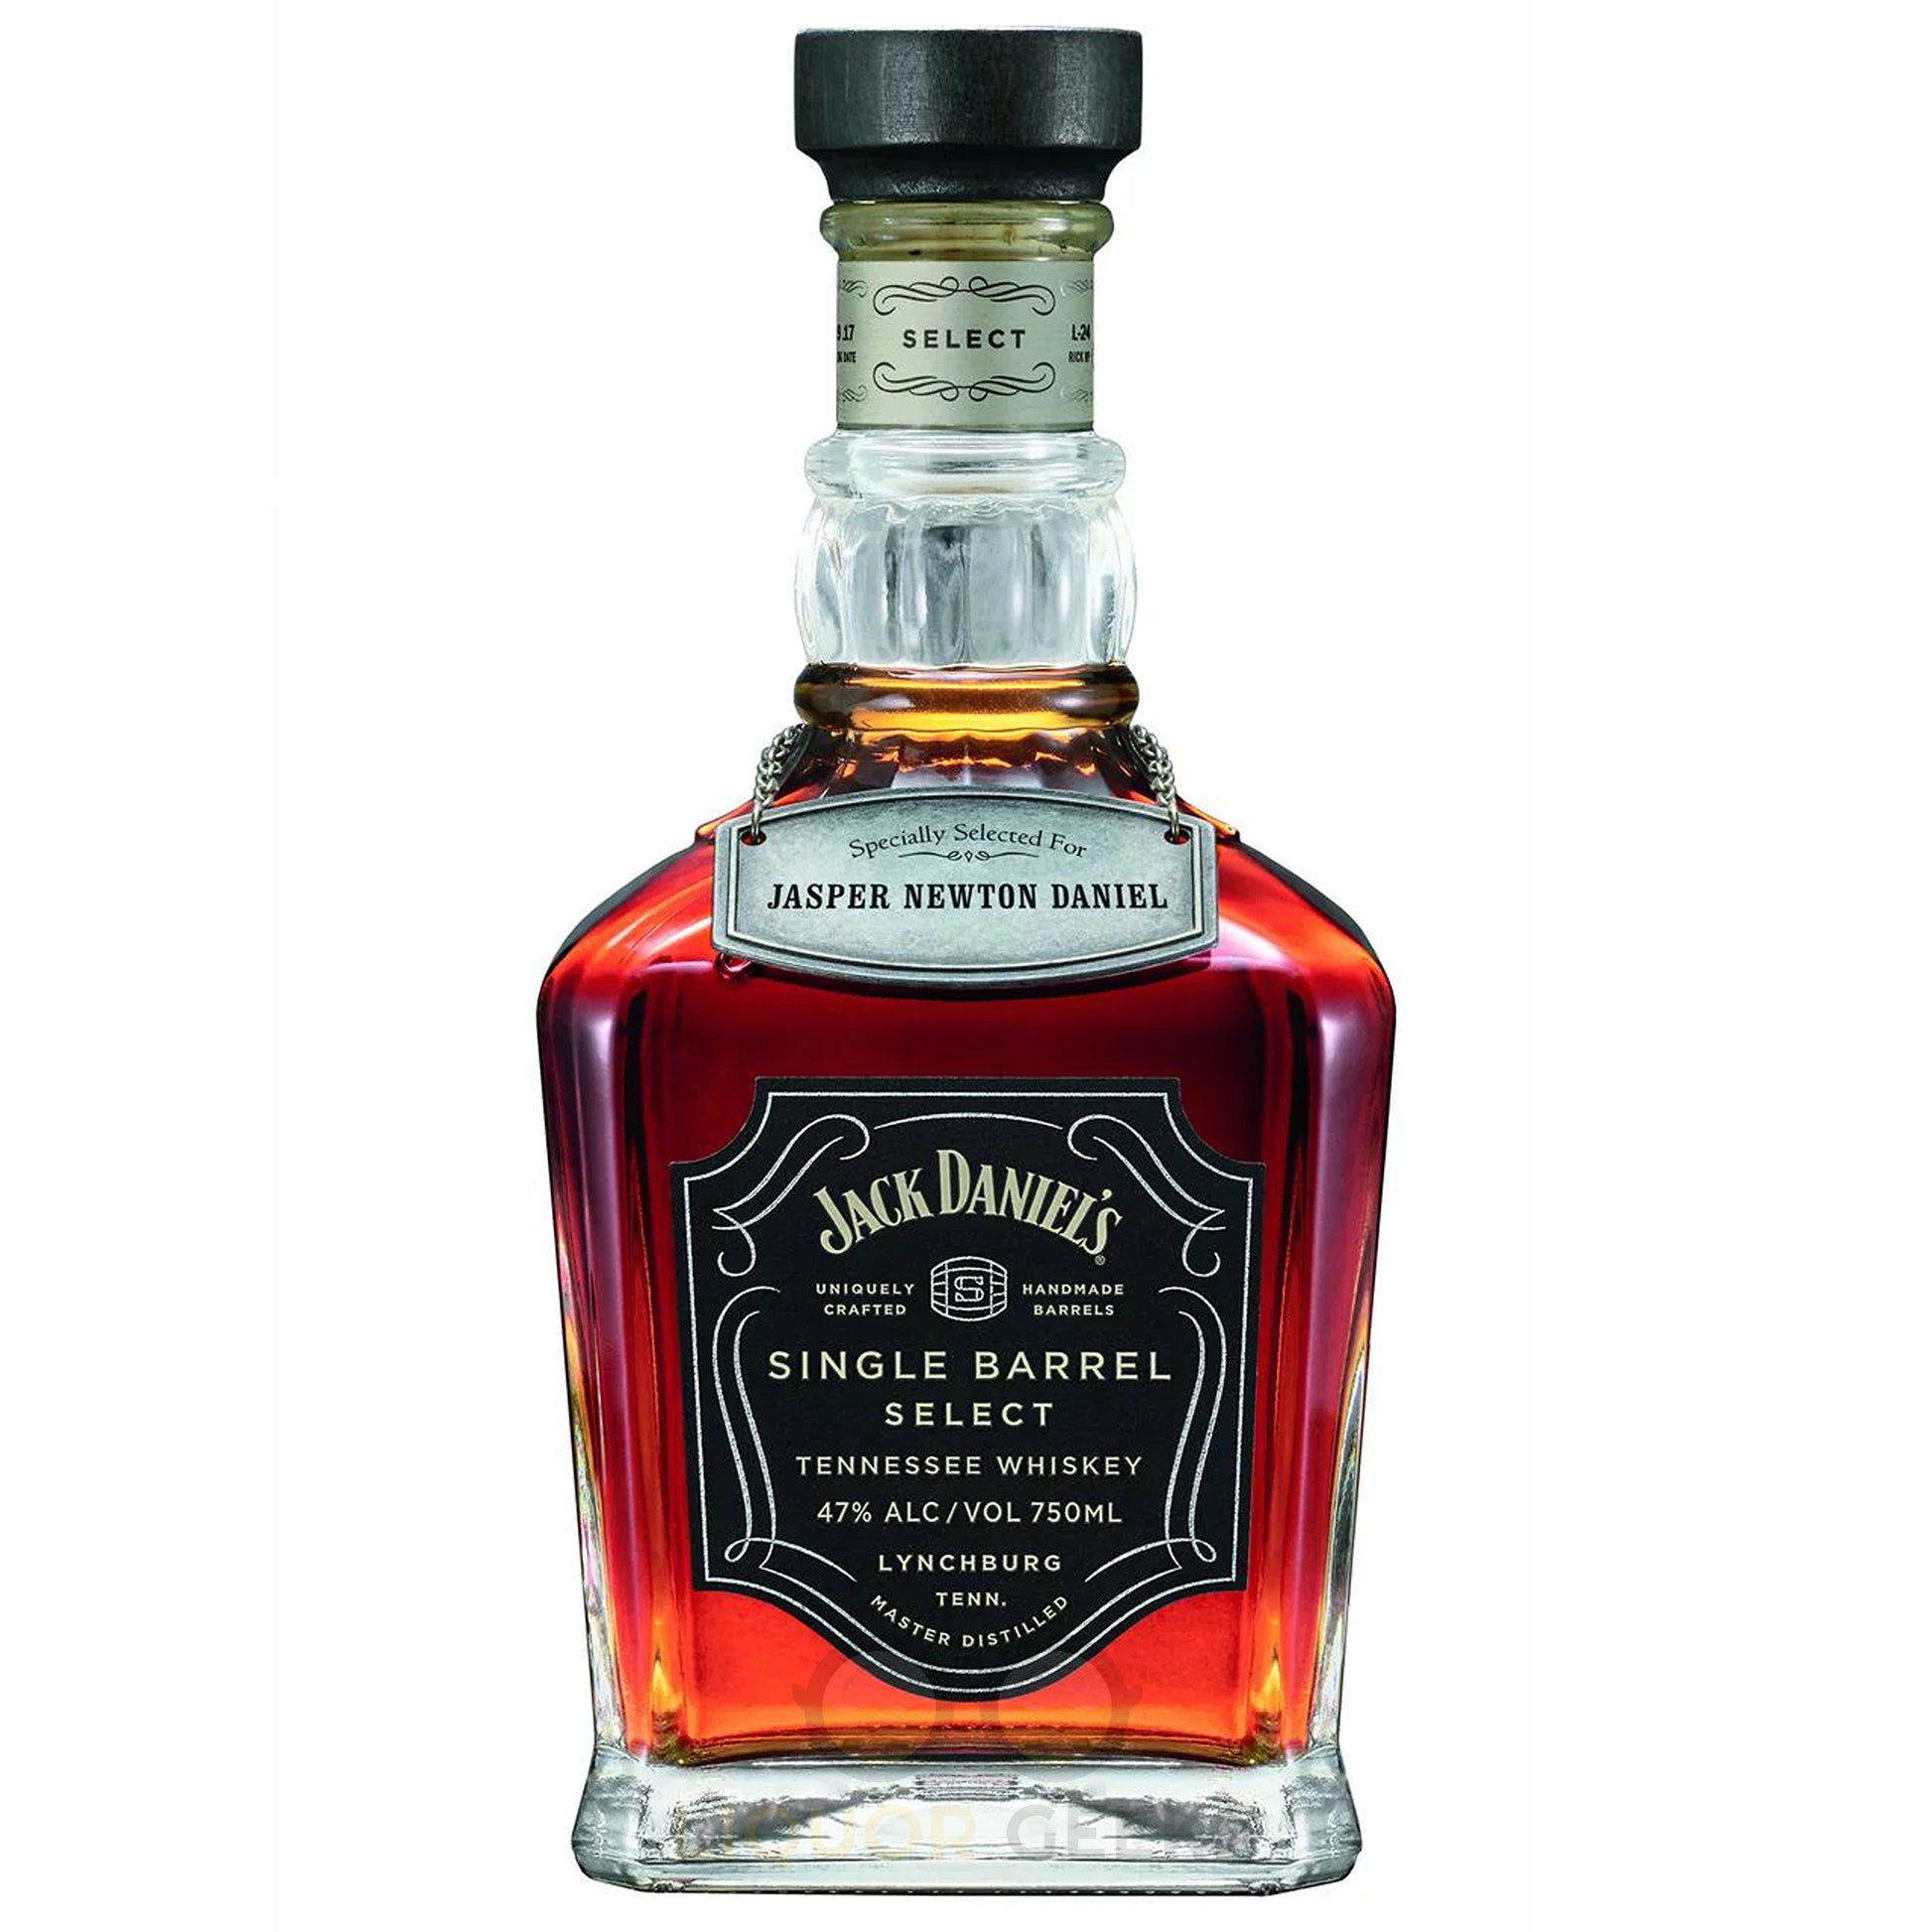 Jack Daniel's Single Barrel Select Tennessee Whiskey - Liquor Geeks